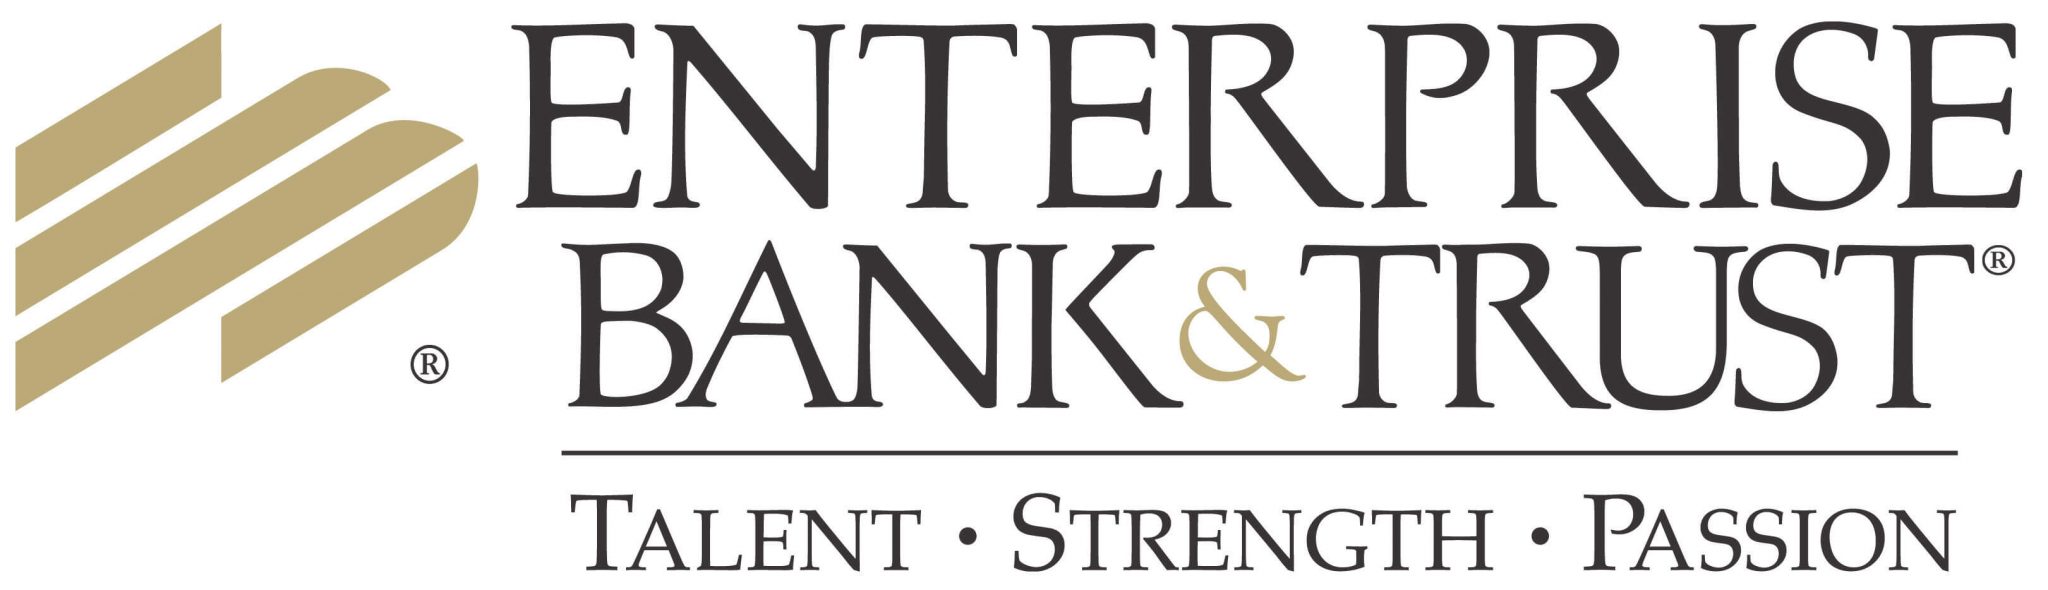 Enterprise-Bank-Trust-Logo